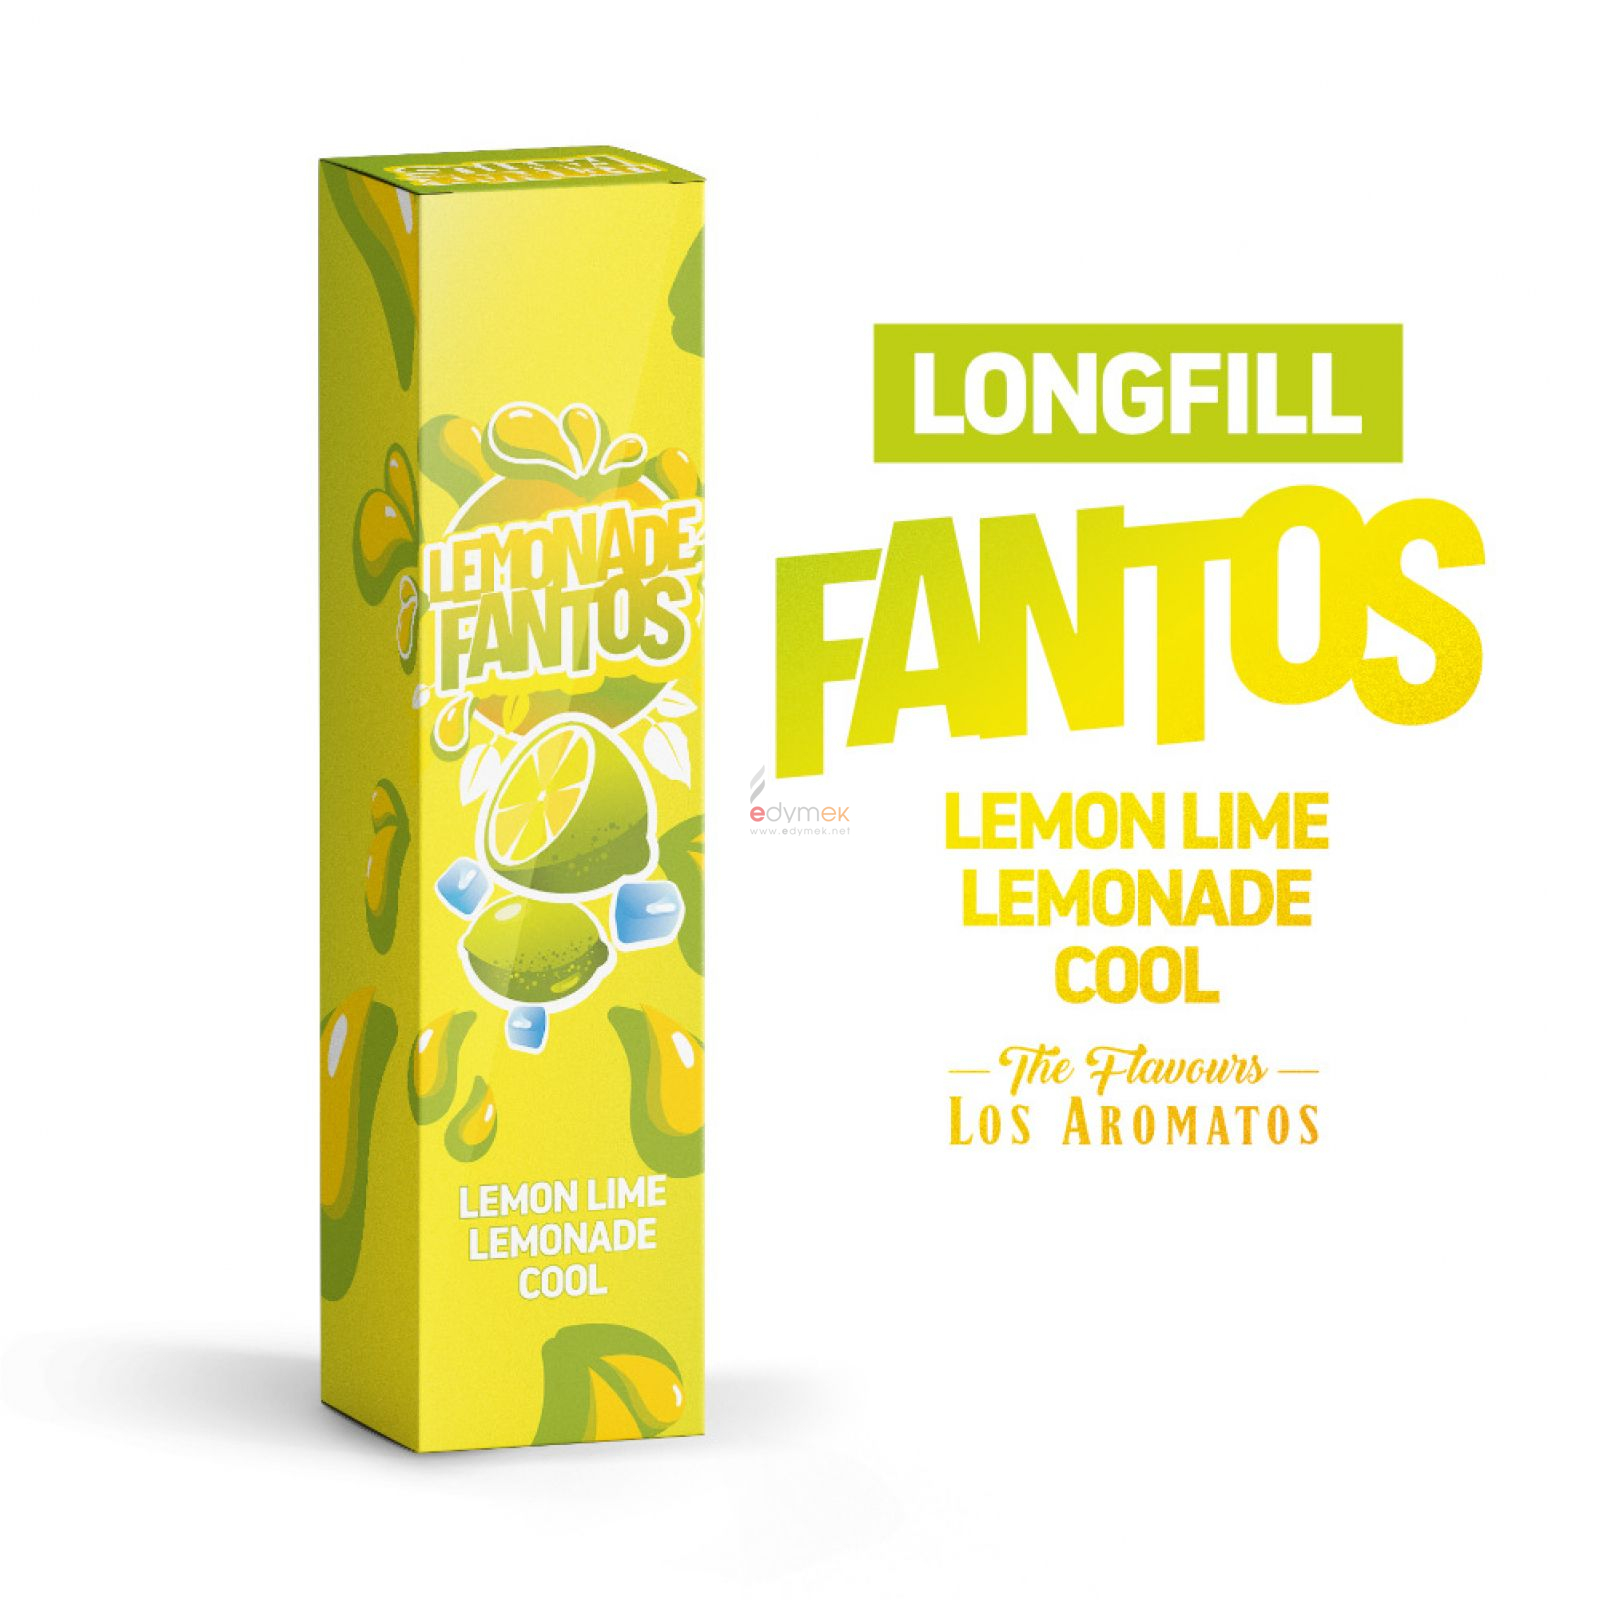 longfill-fantos-koncentrat-9ml-lemonade-fantos-829fc34878e44a9181579085da64faac-9271ee26.jpg